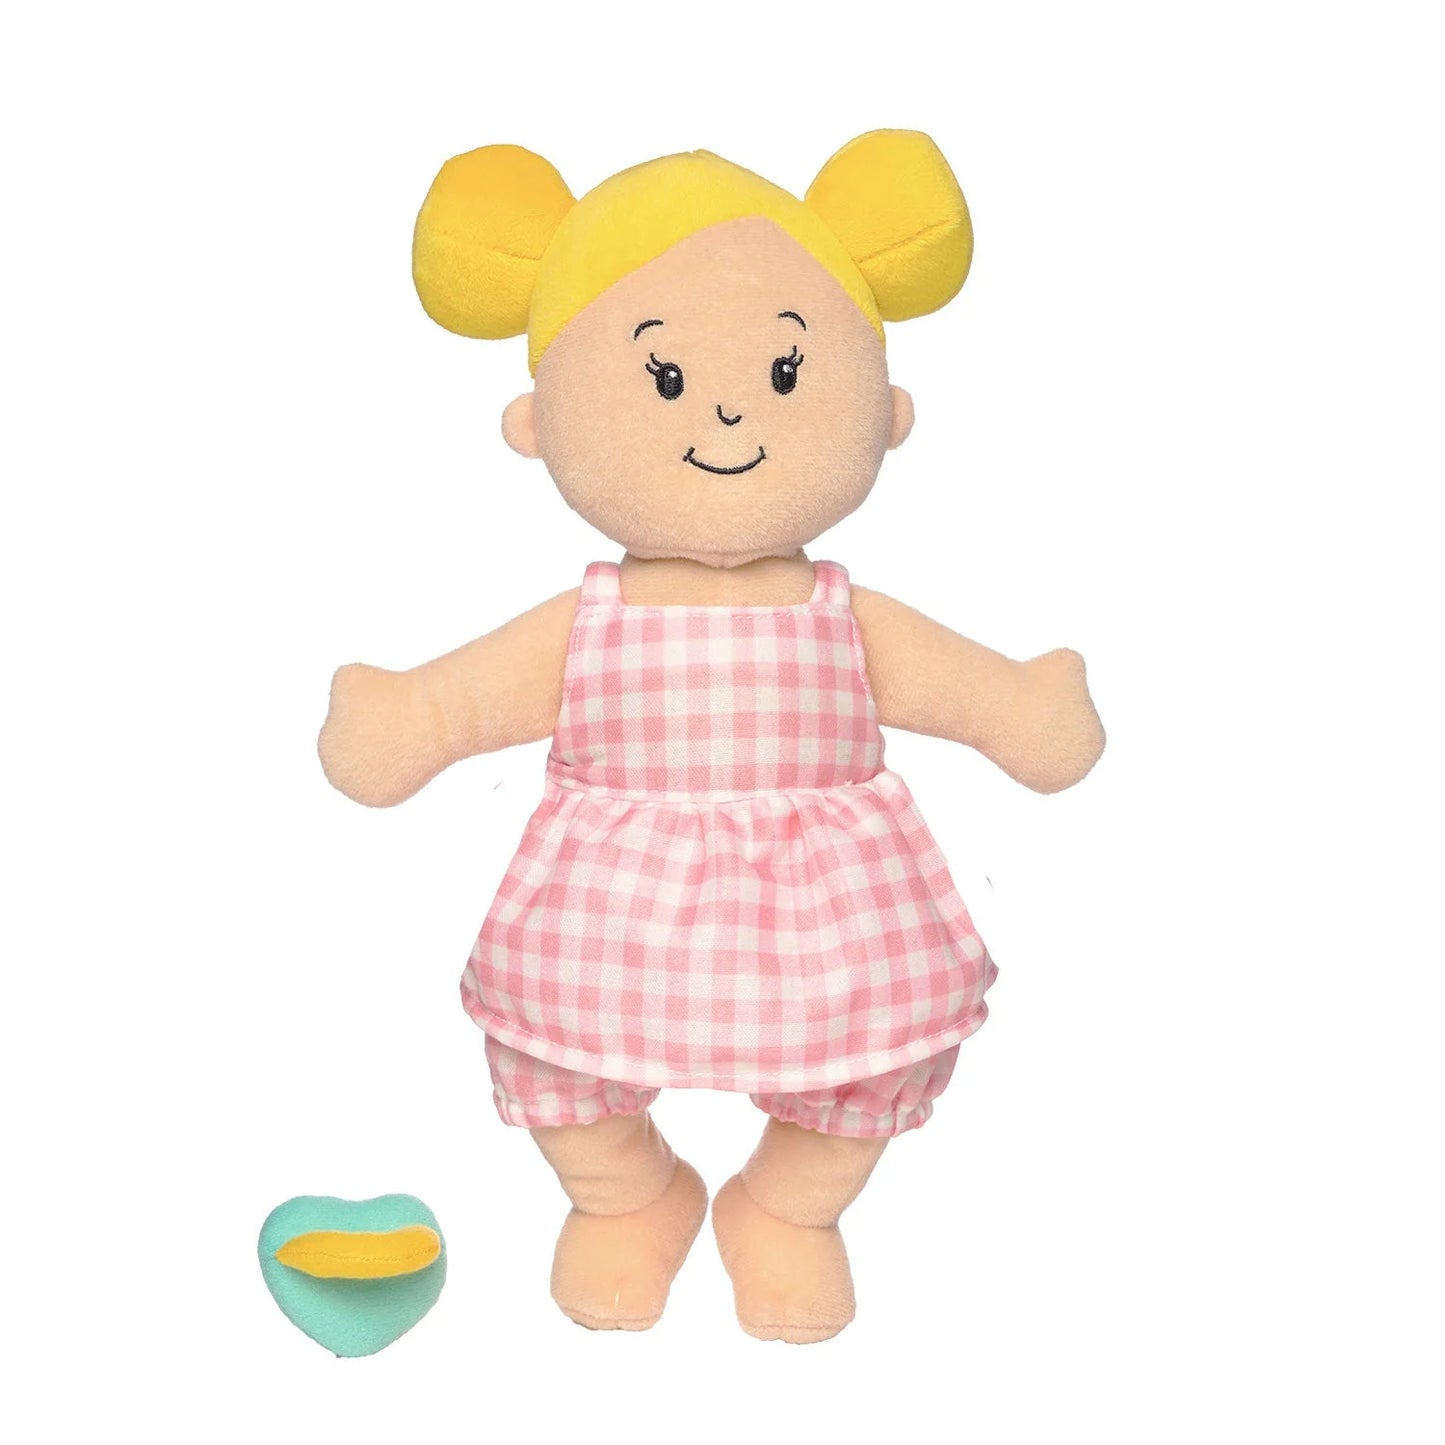 Wee Baby Stella Peach Doll